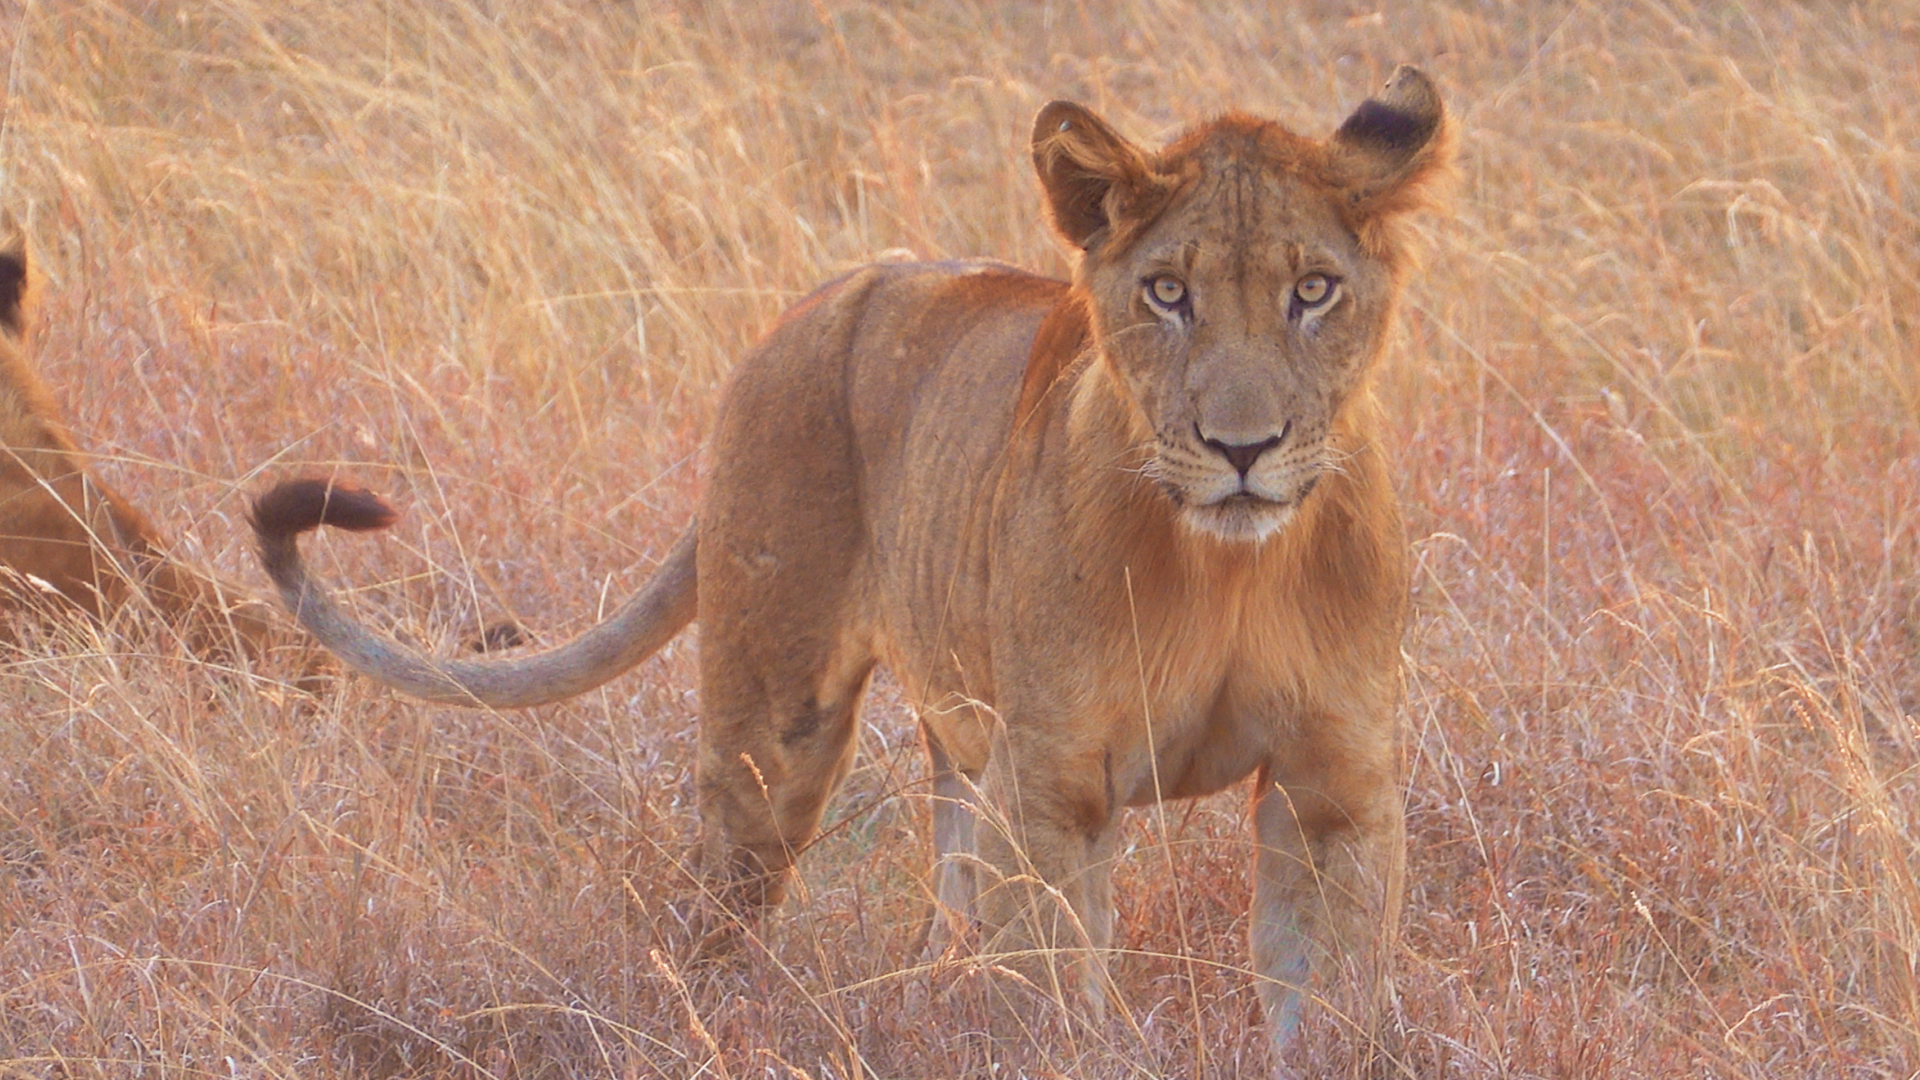 tree climbing lion queen elizabeth national park uganda